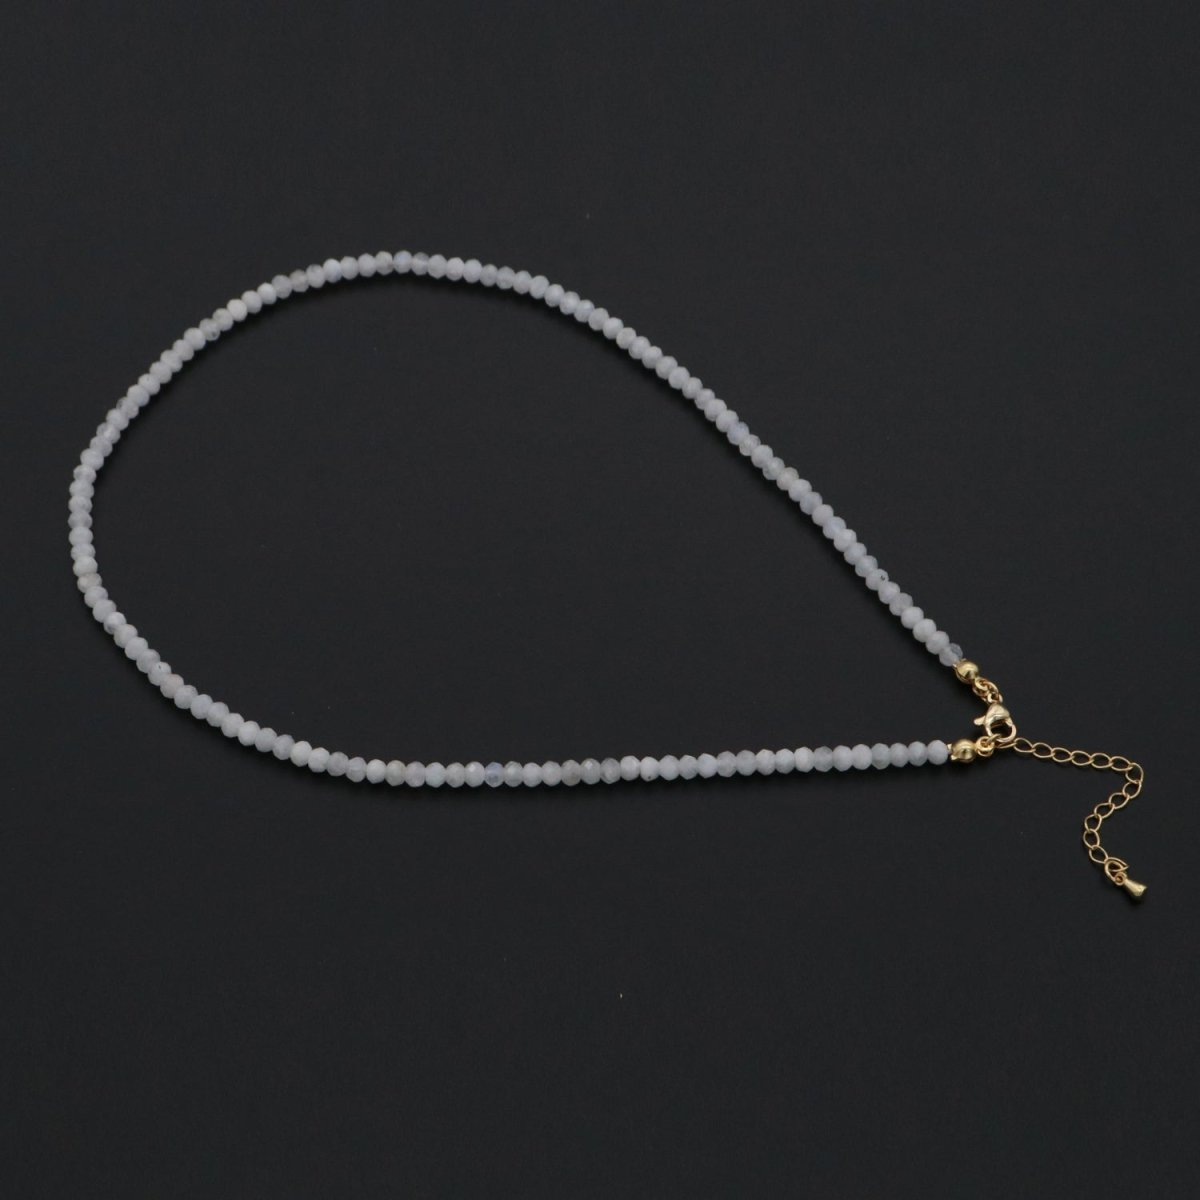 Dainty Moon Stone Necklace gemstone minimalist Jewelry beaded Healing Stone Necklace | WA-261 Clearance Pricing - DLUXCA